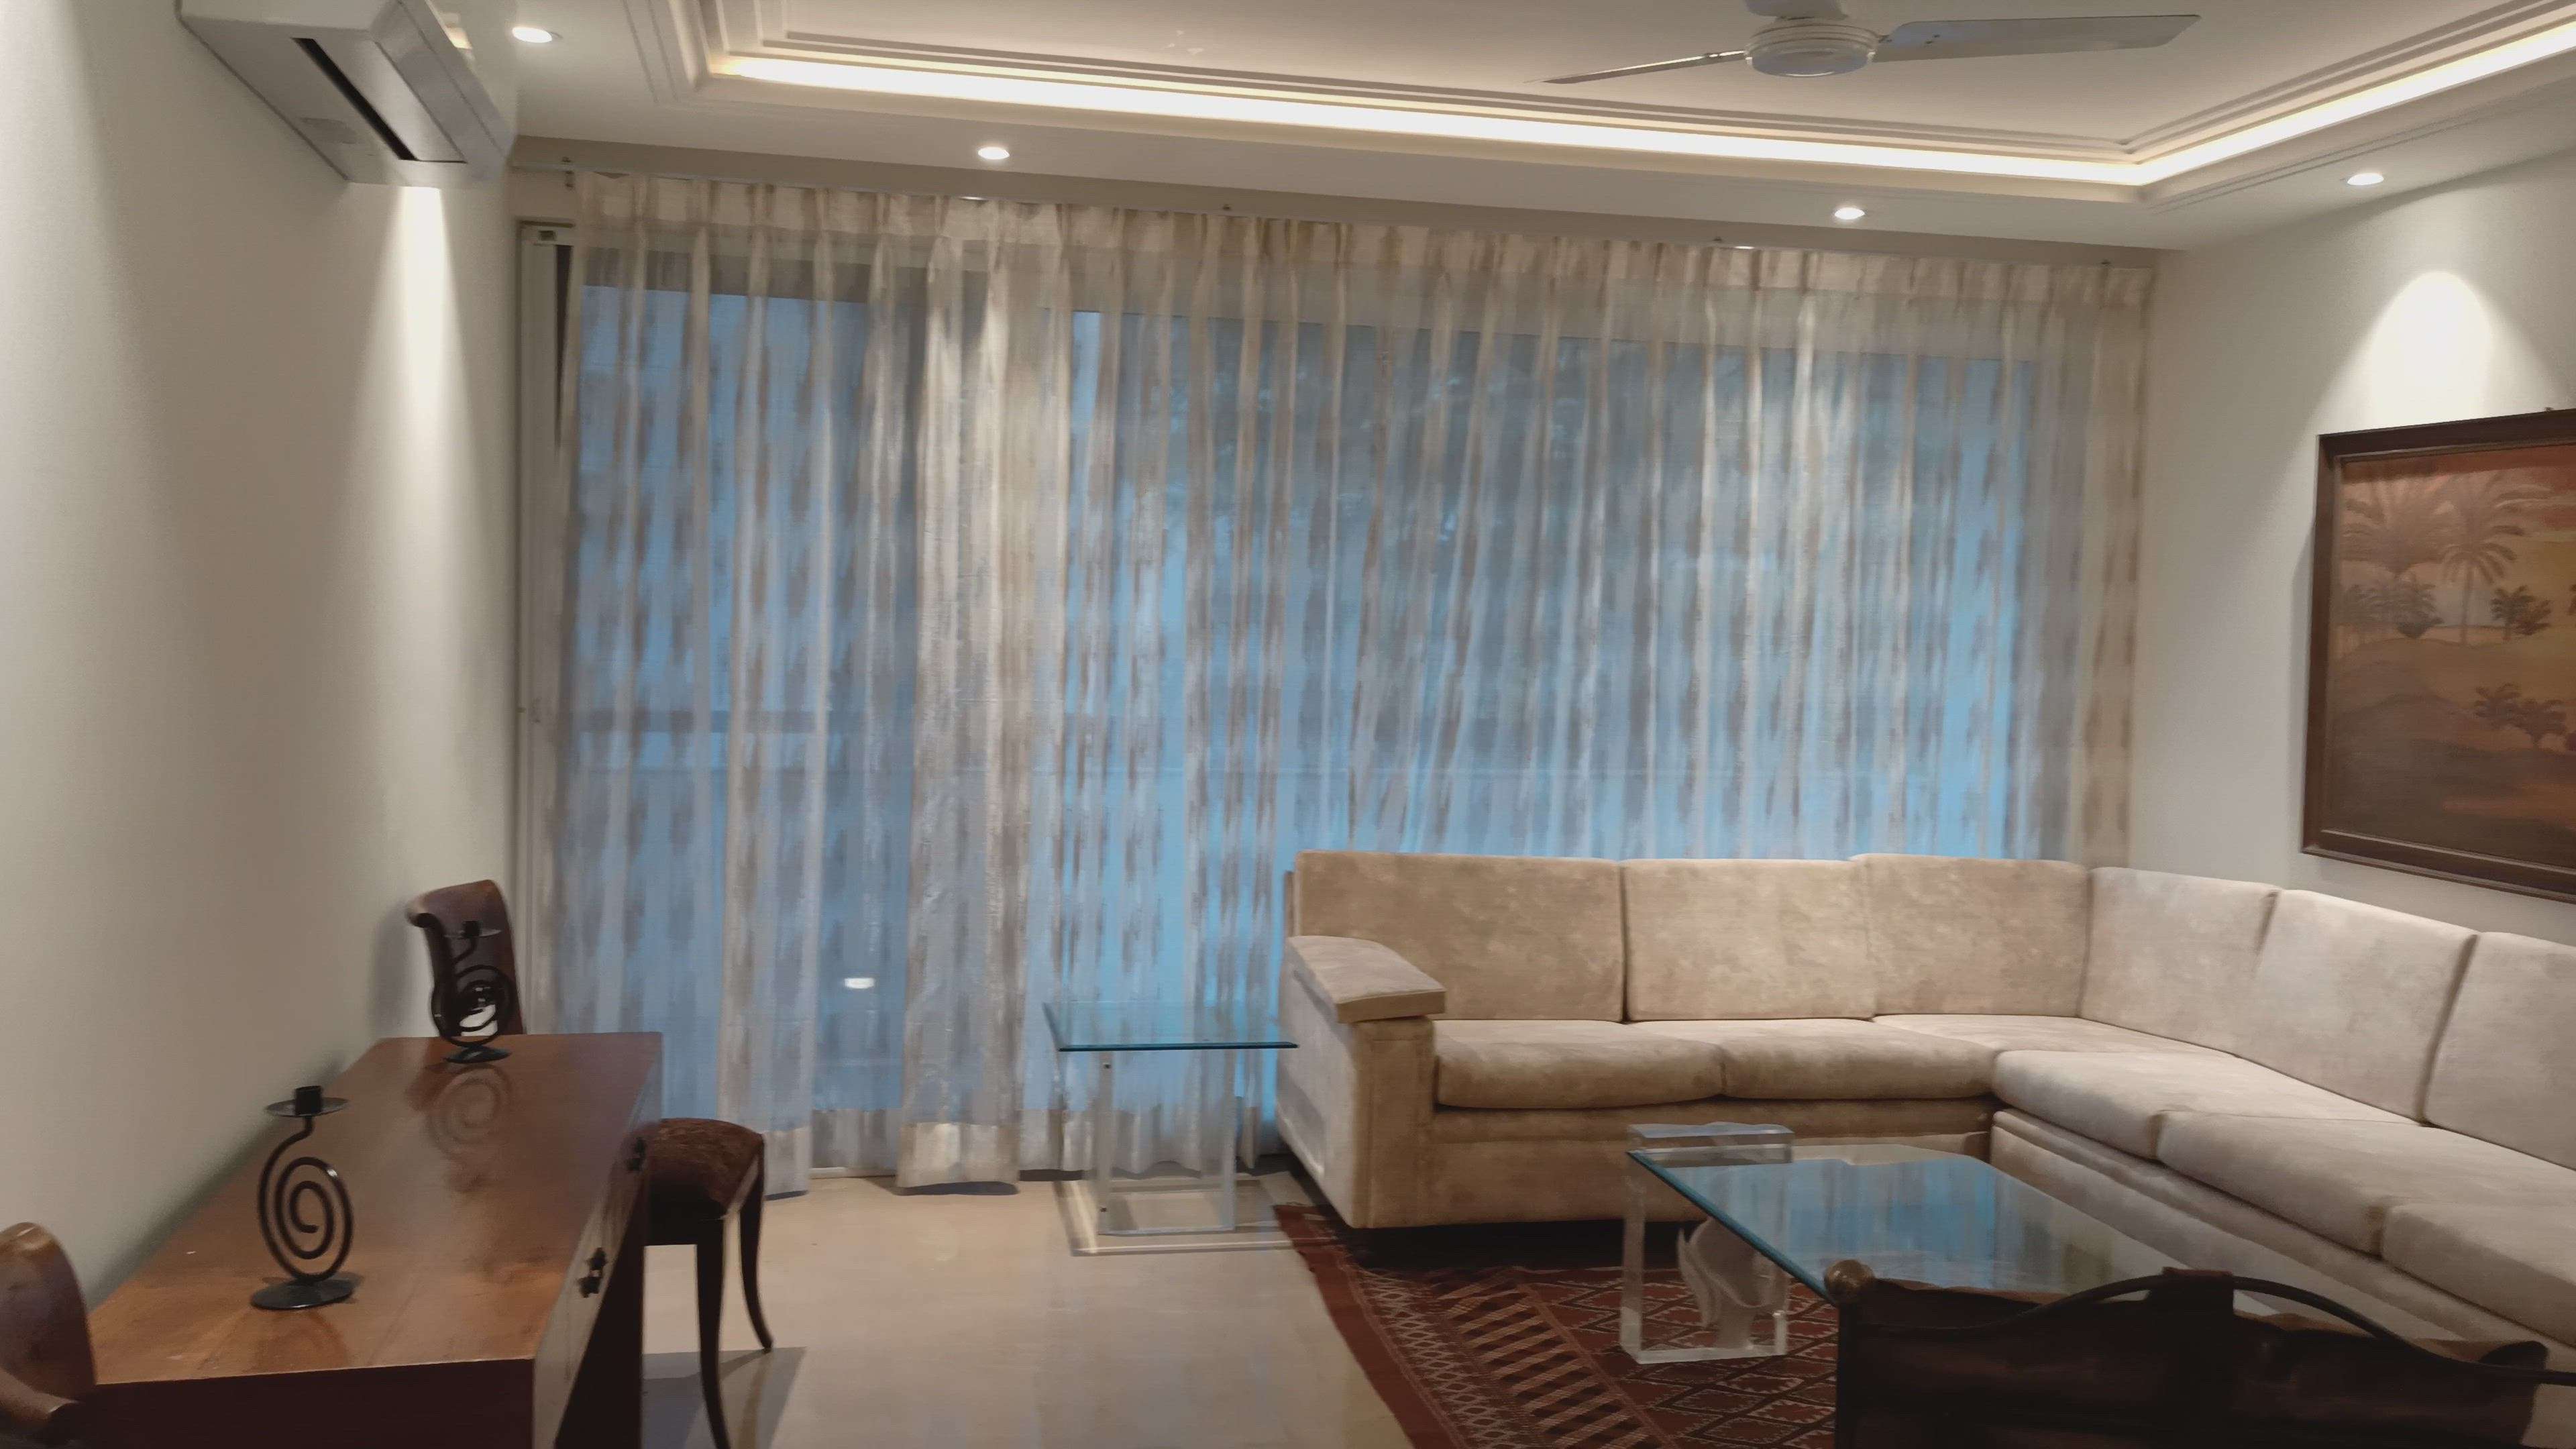 Luxury interior at affordable price,
kindly contact us
Mystify interiors  #InteriorDesigner  #LivingRoomInspiration  #LivingroomDesigns  #HouseRenovation  #HomeDecor